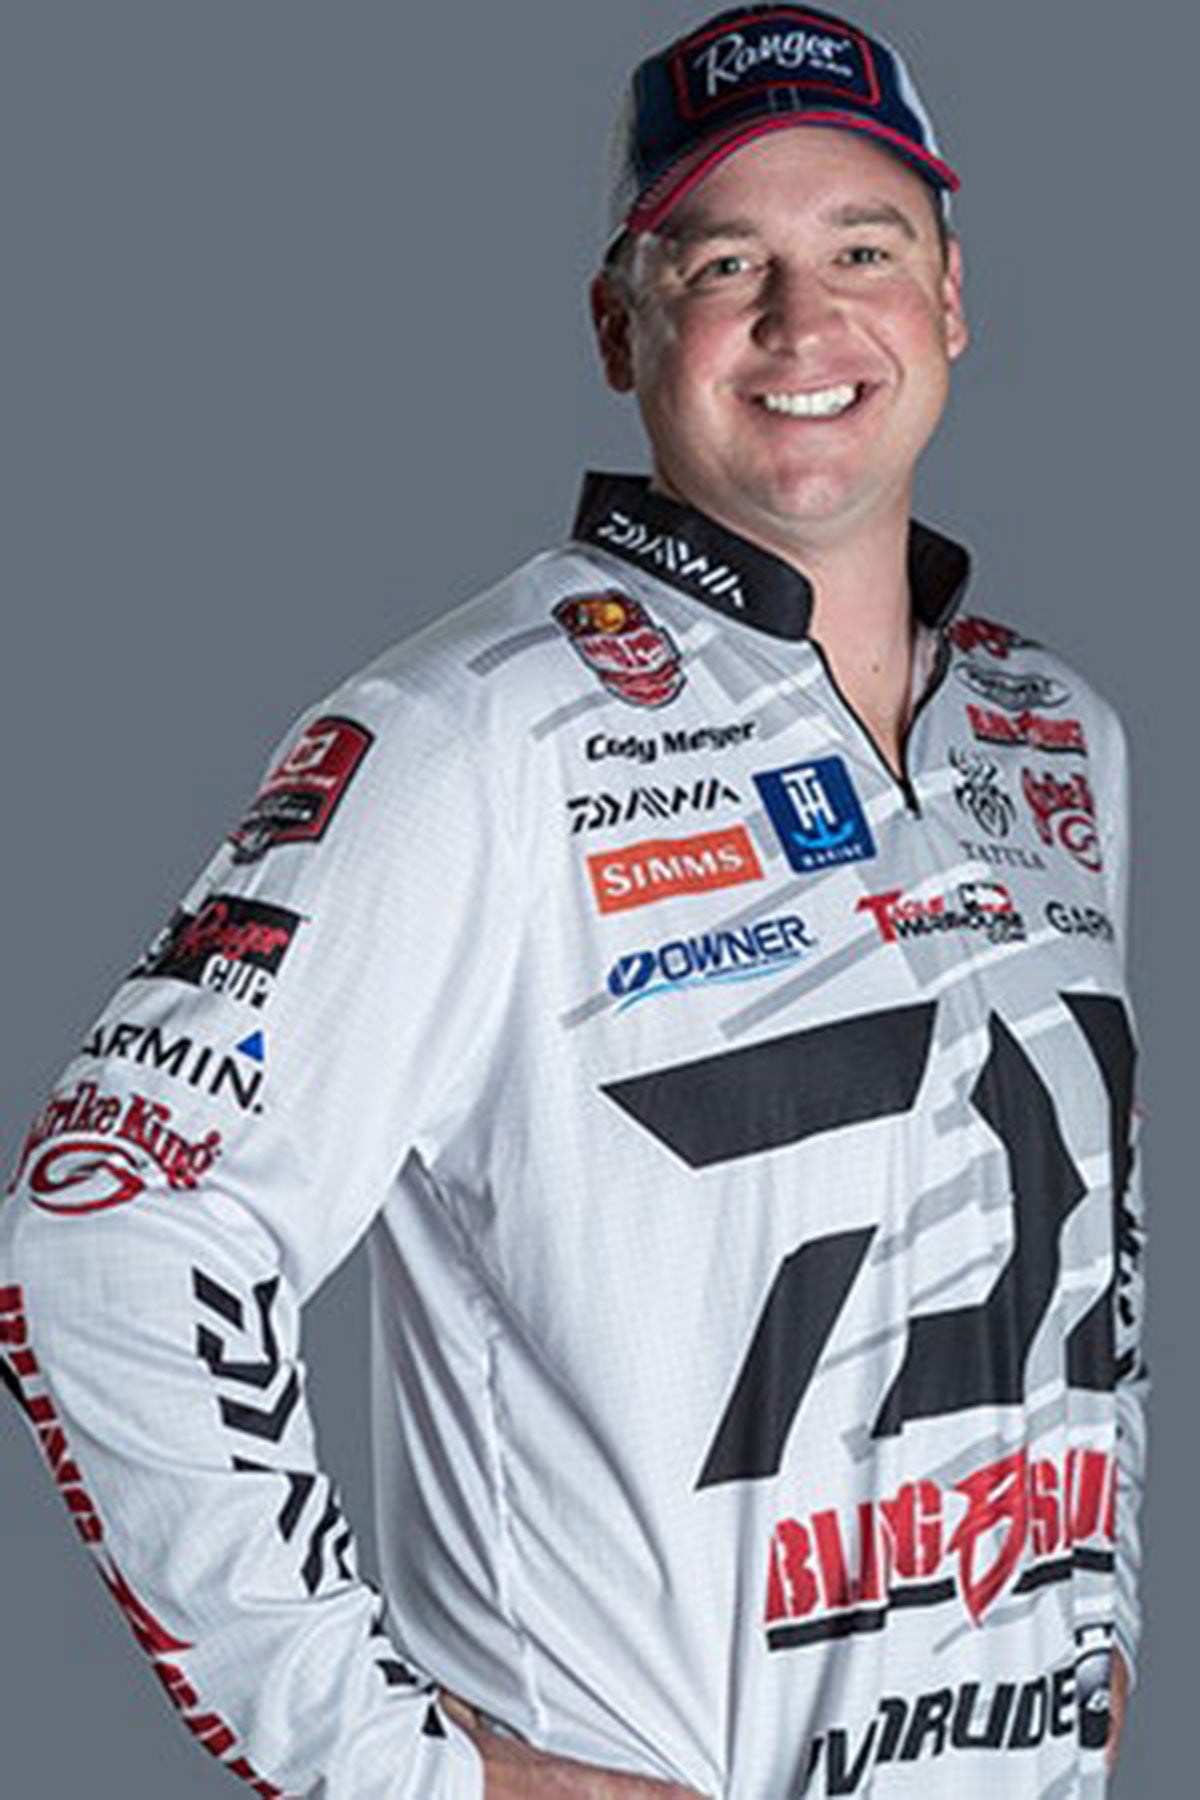 Profile image of Cody Meyer